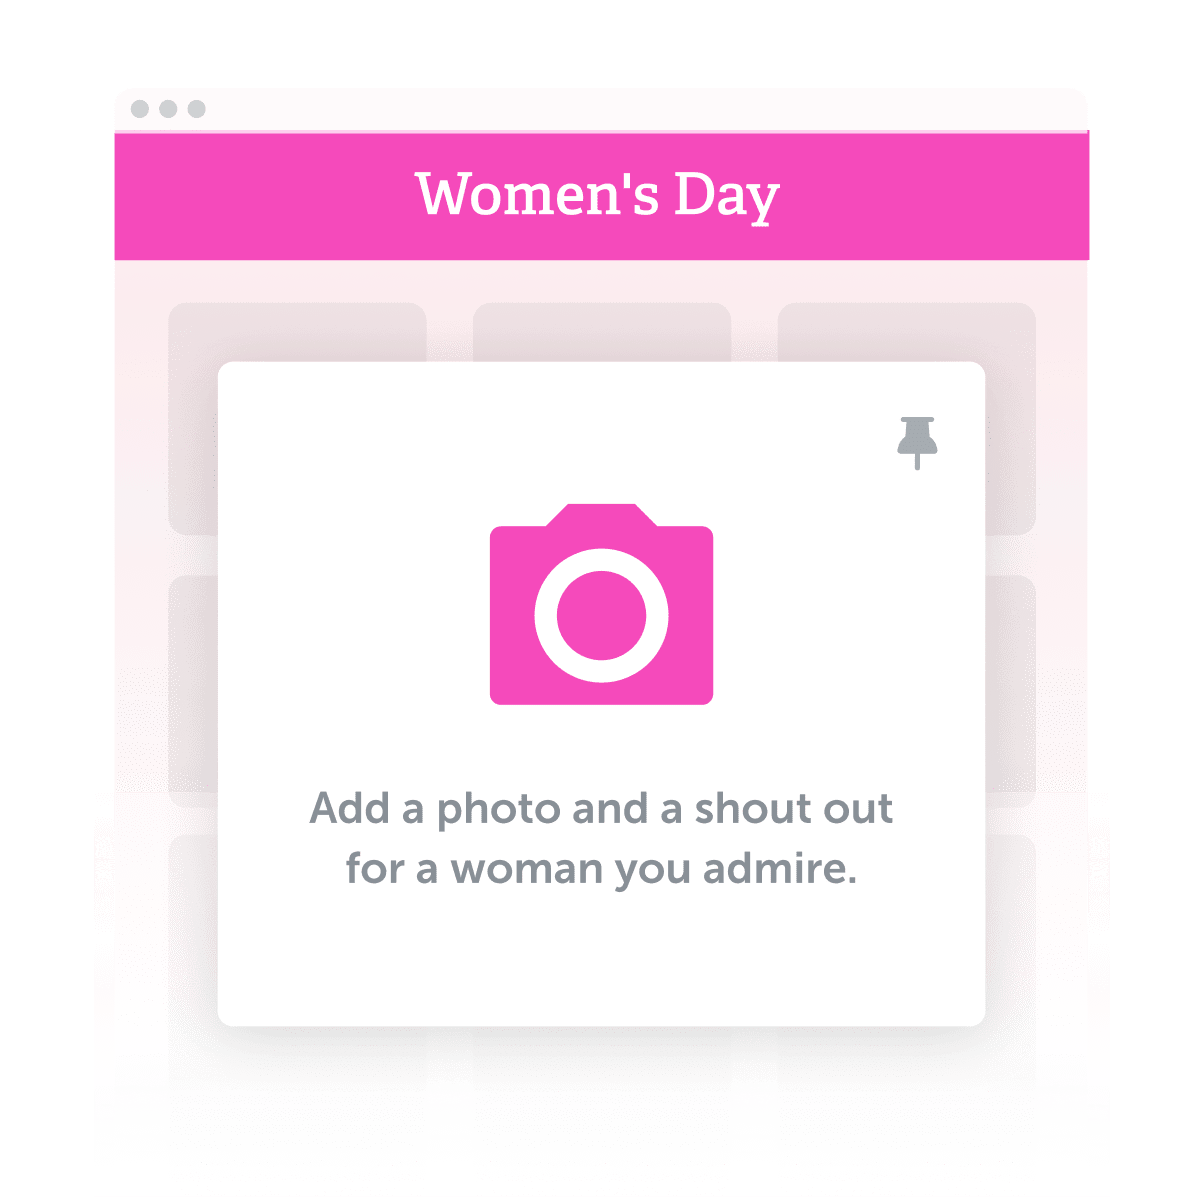 Women's day photo upload option